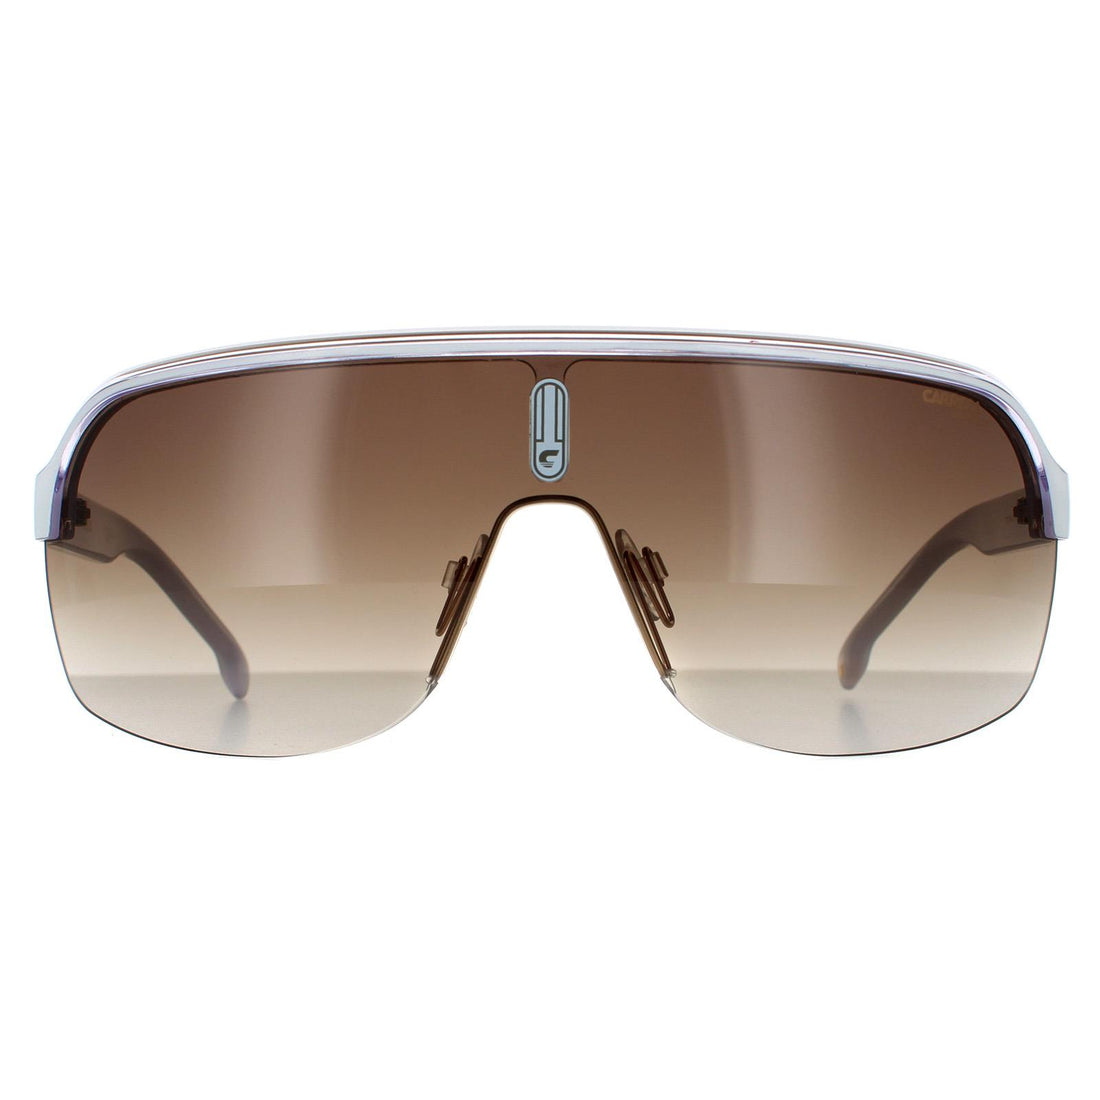 Carrera Topcar 1/N Sunglasses White Crystal / Brown Gradient